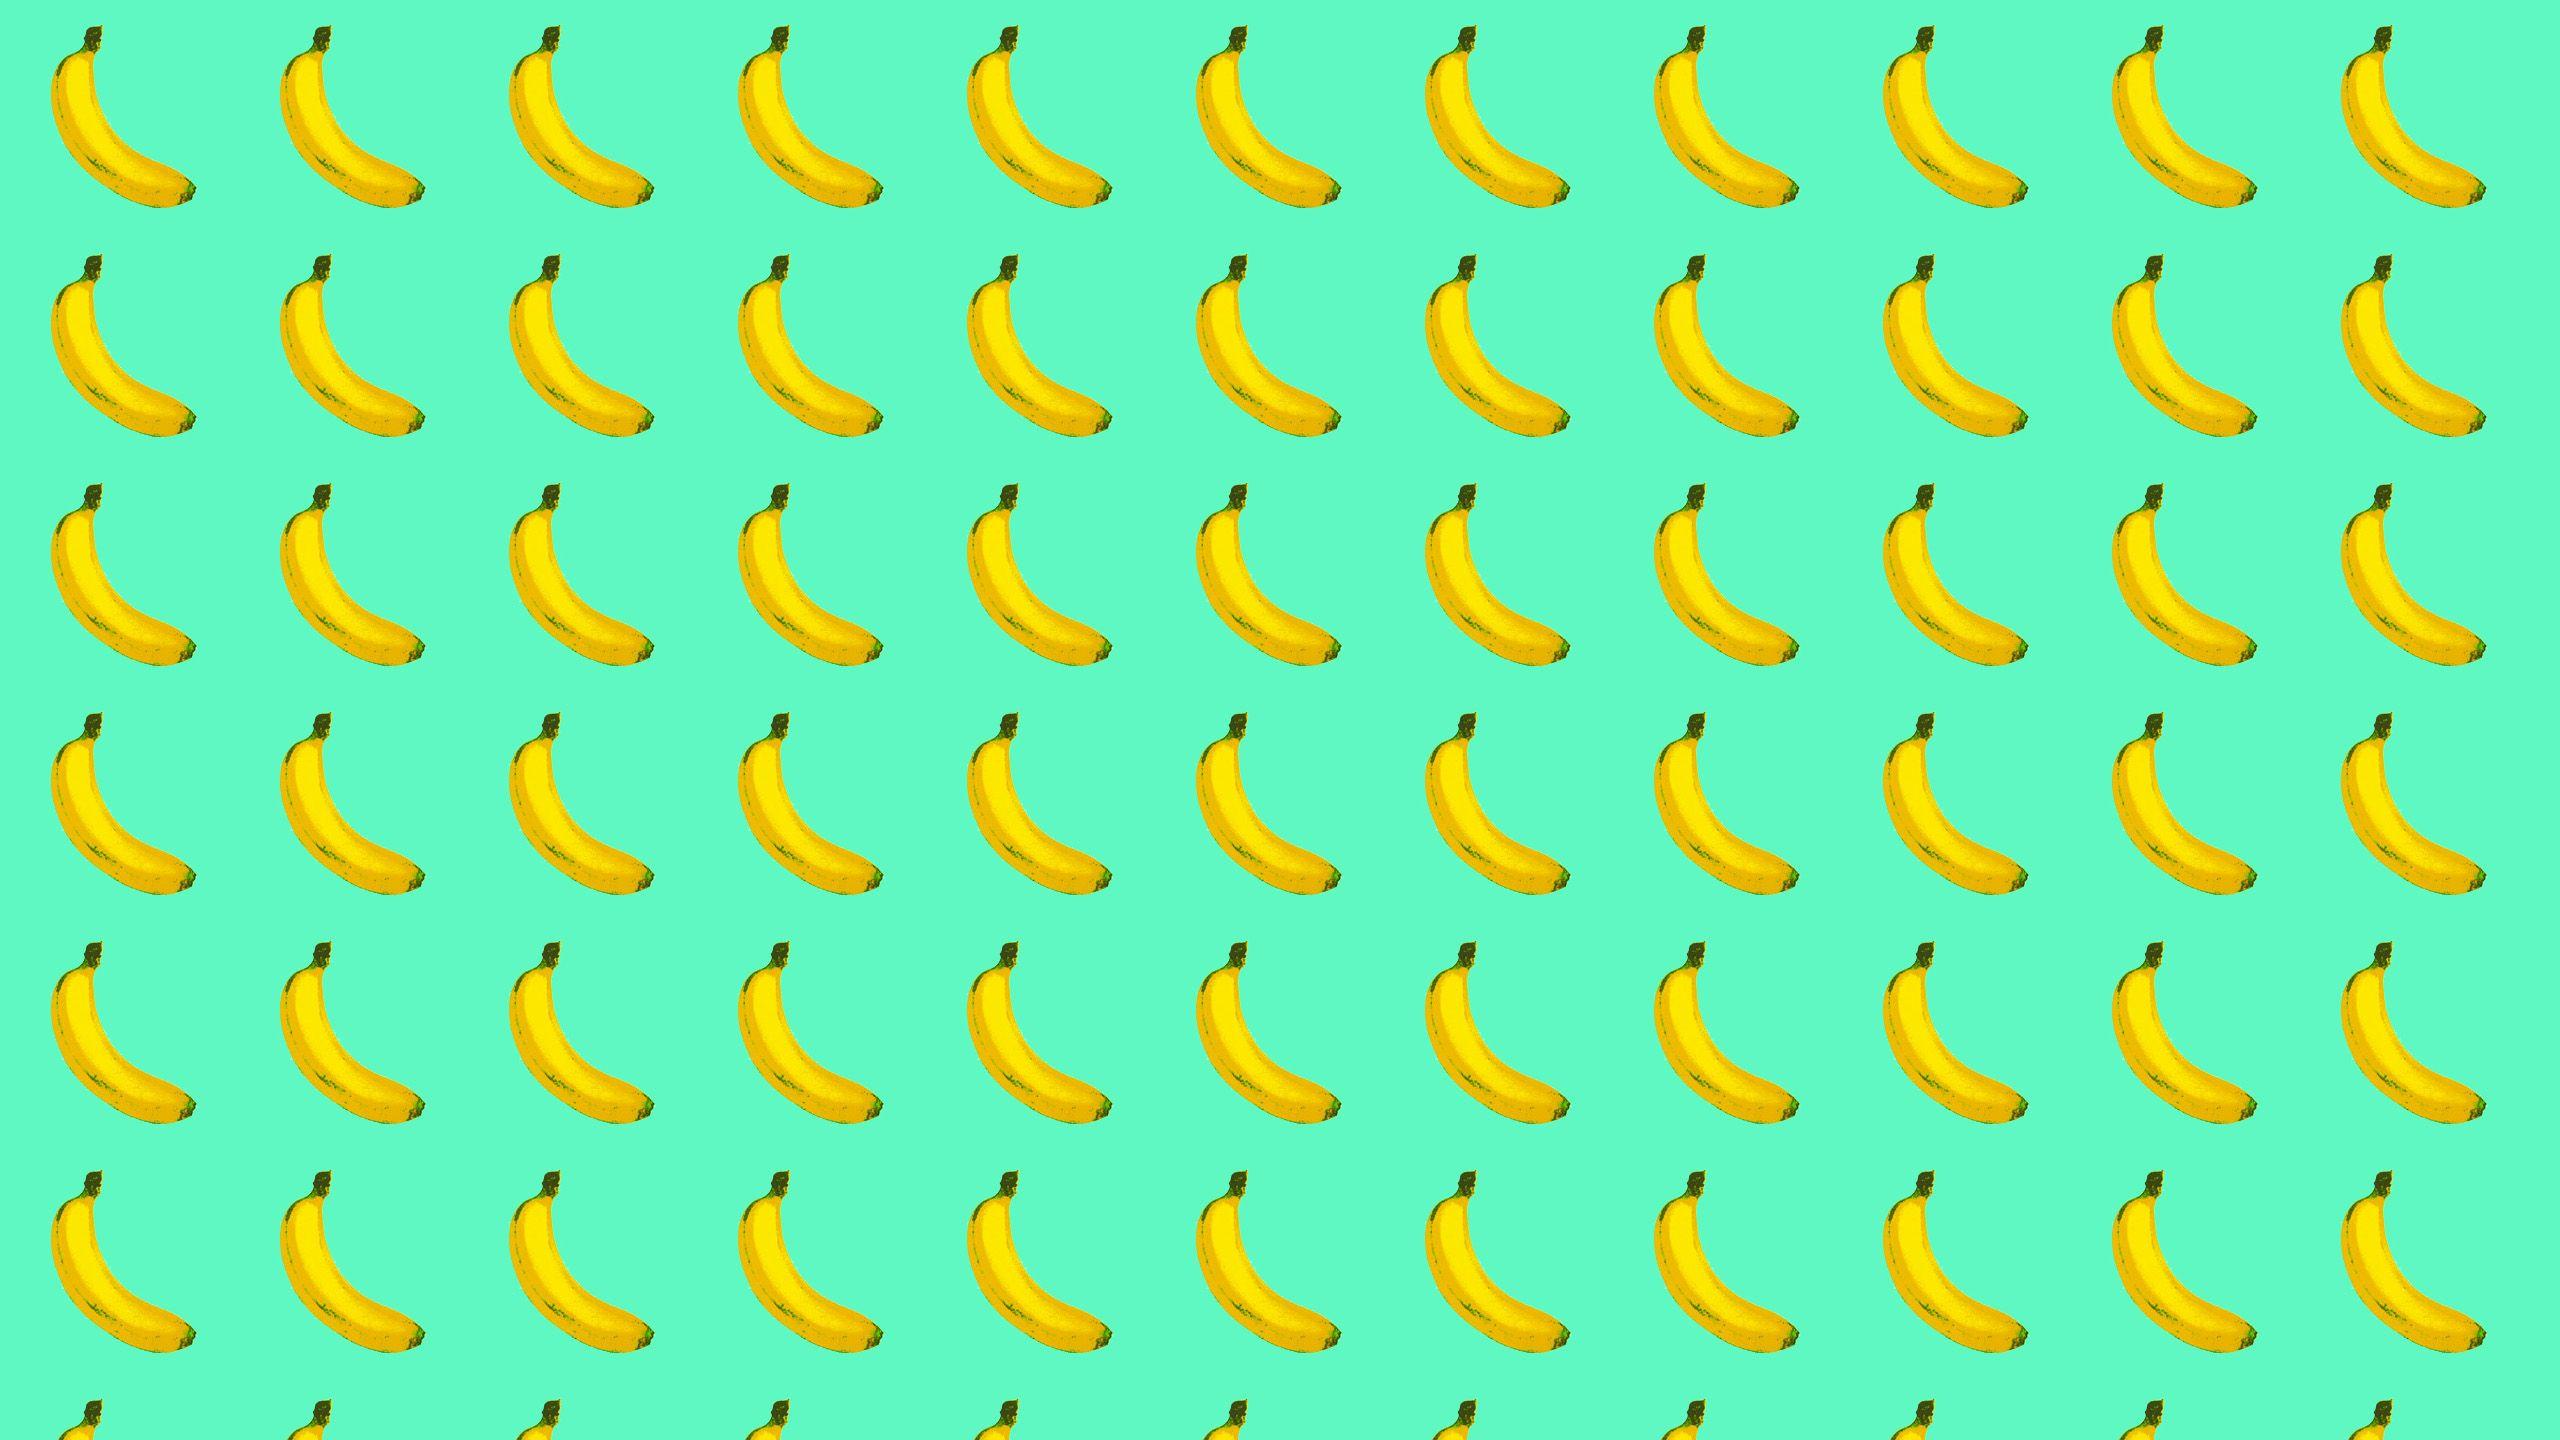 Banana Tumblr Wallpaper High Definition, 3D & abstract Wallpaper